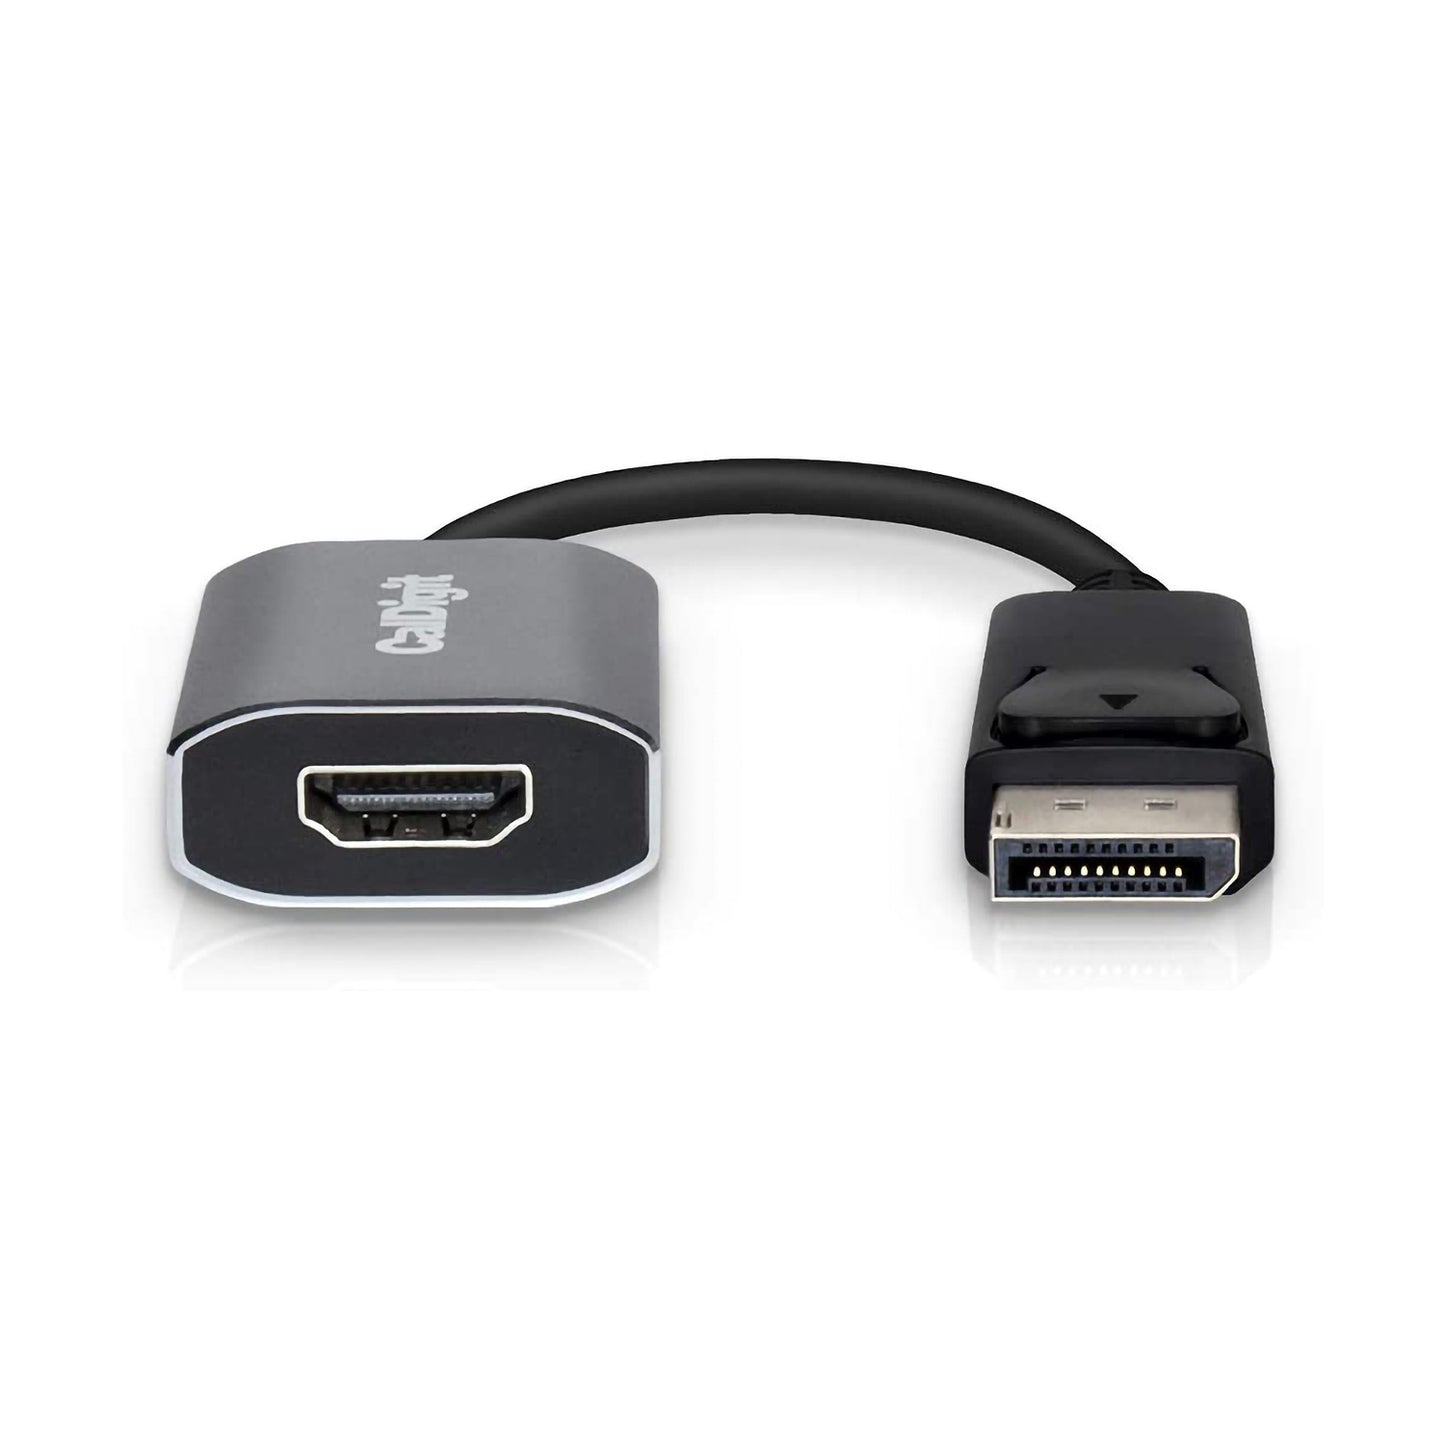 HDMI 2.0 to DisplayPort 1.2 Adapter